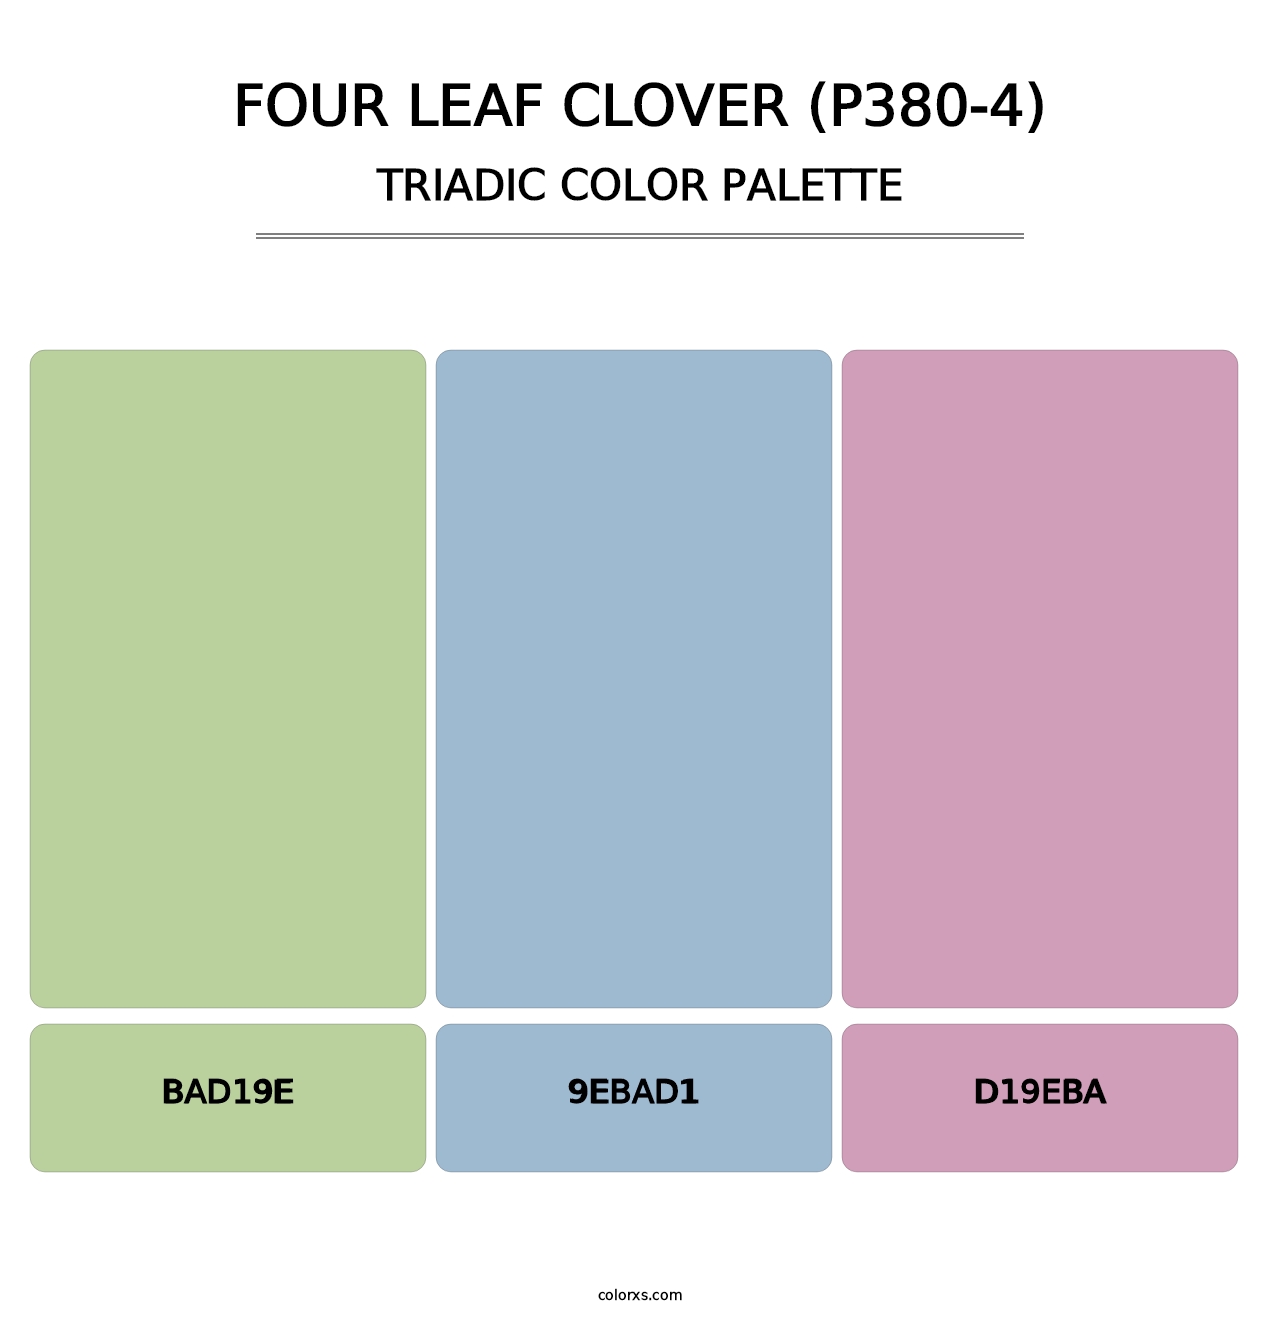 Four Leaf Clover (P380-4) - Triadic Color Palette